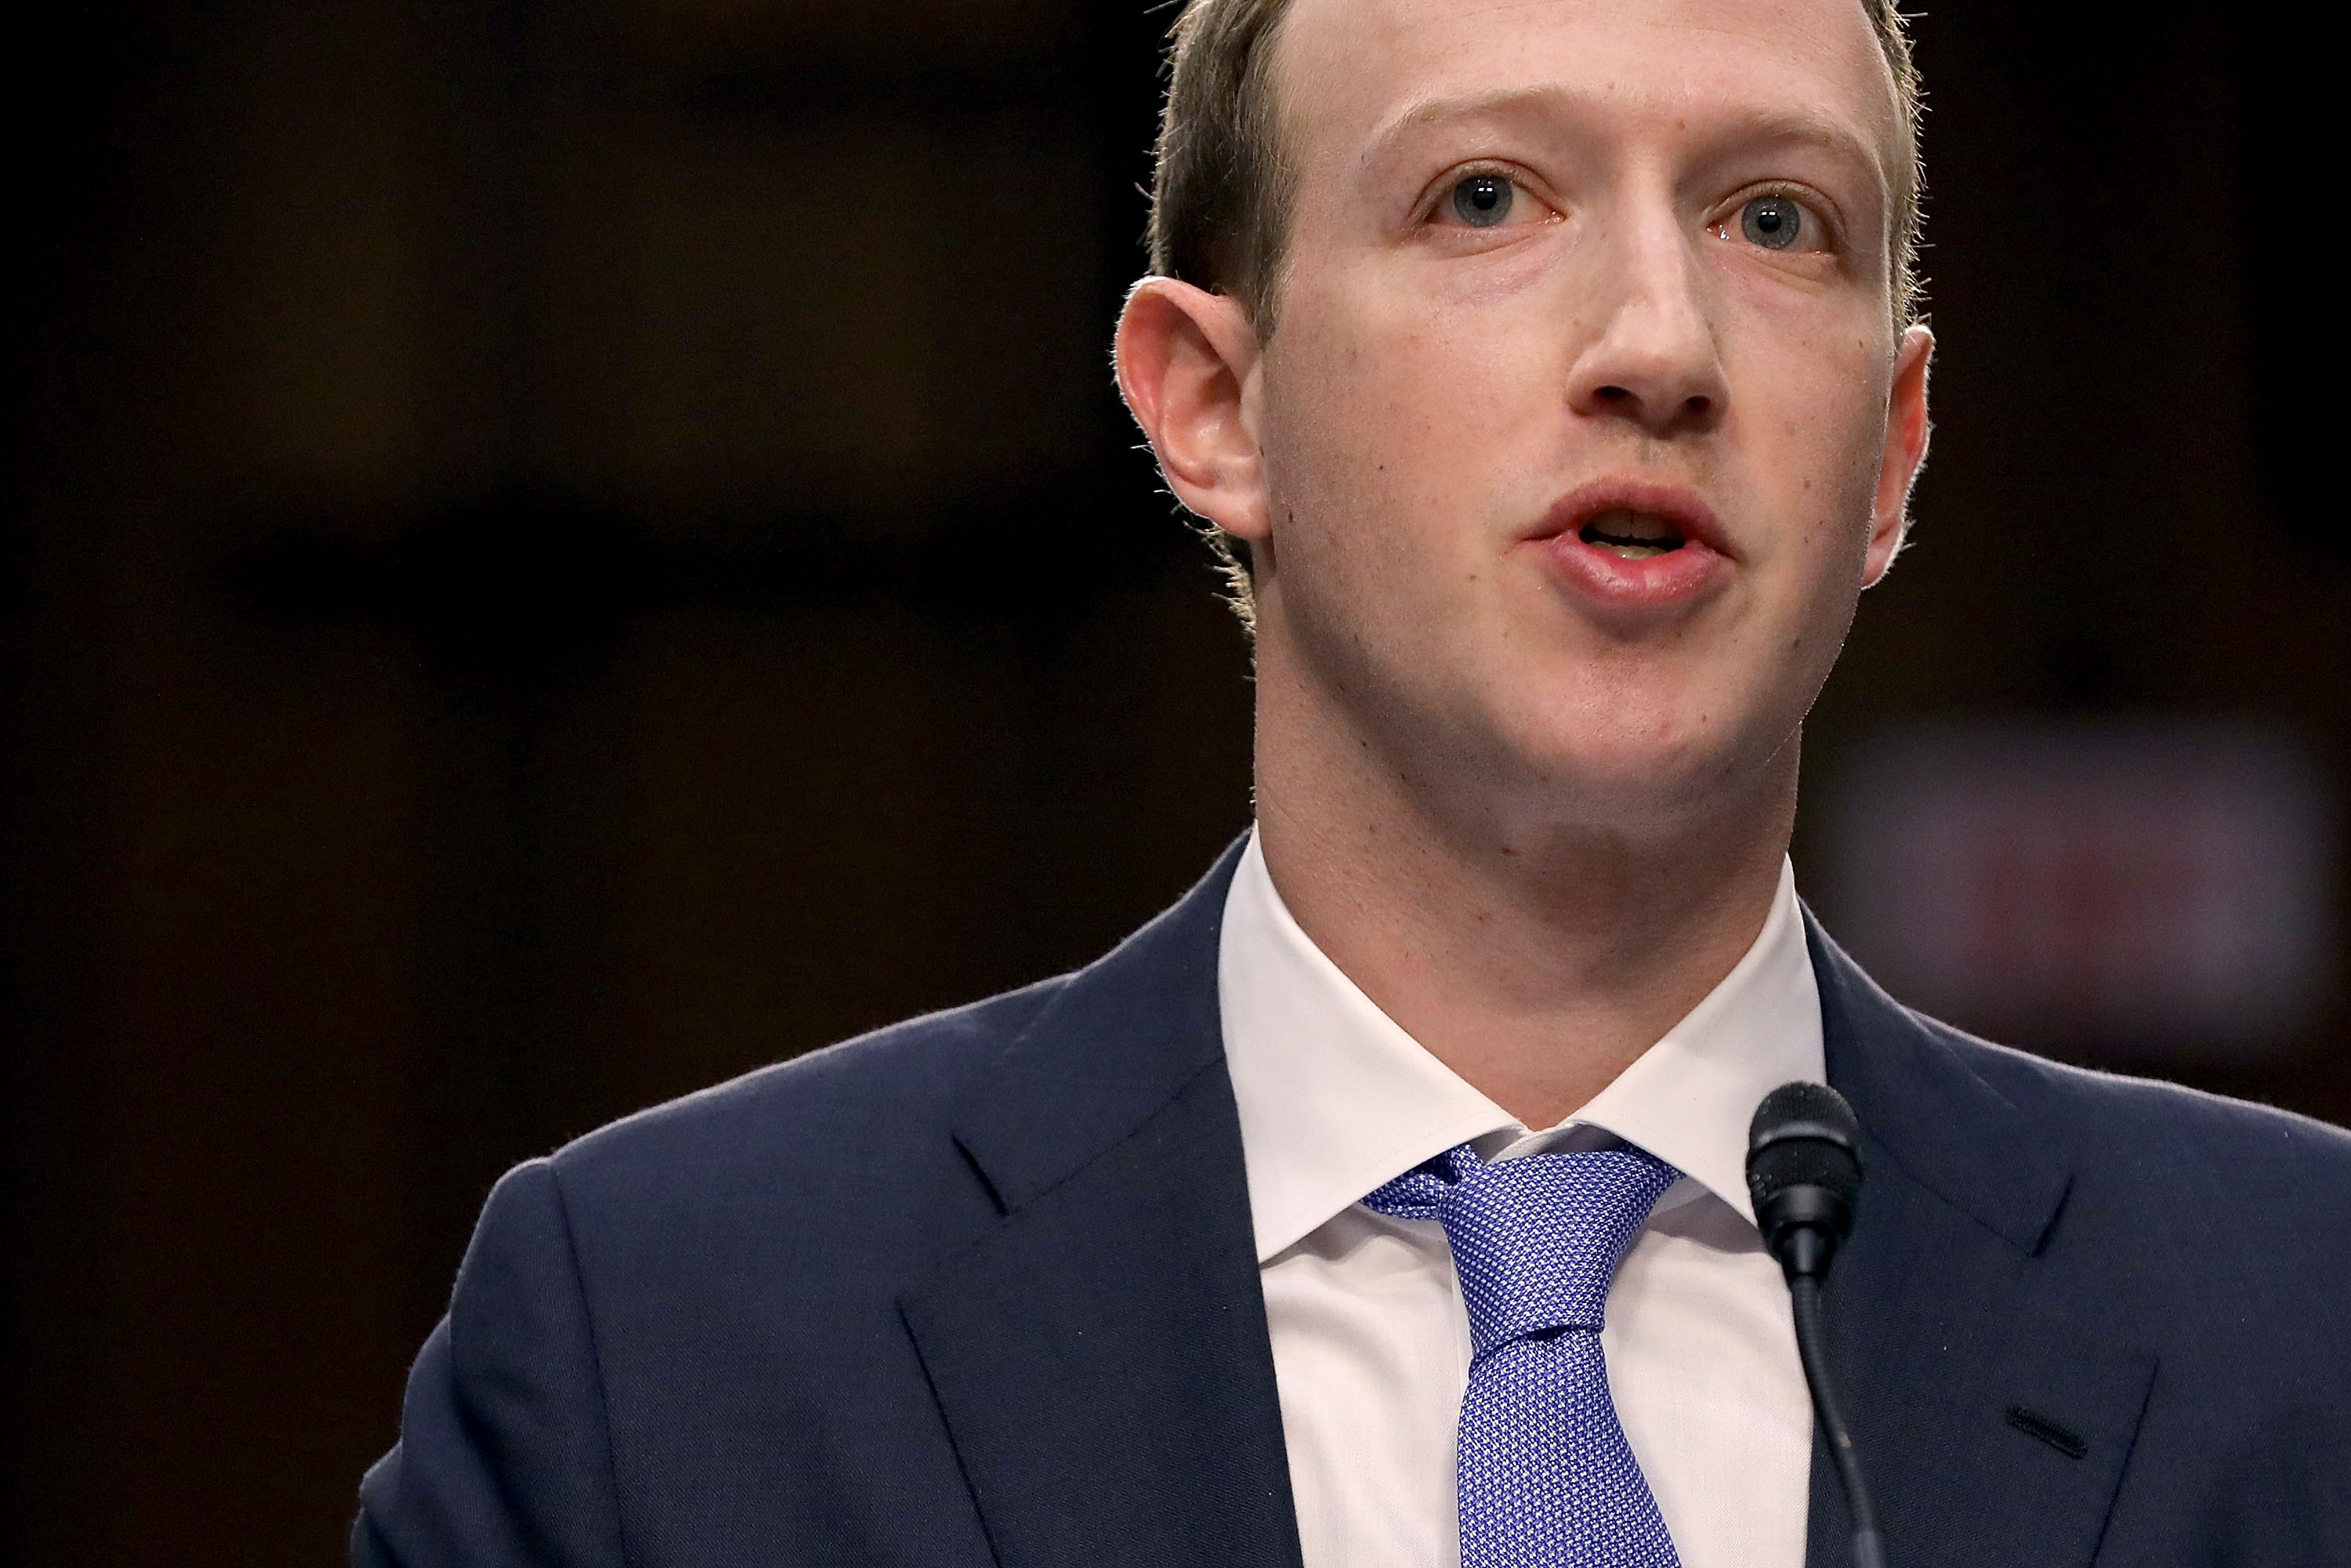 Mark Zuckerberg's Net Worth Skyrocketed as He Testified to Congress. Here's How Much He Earned